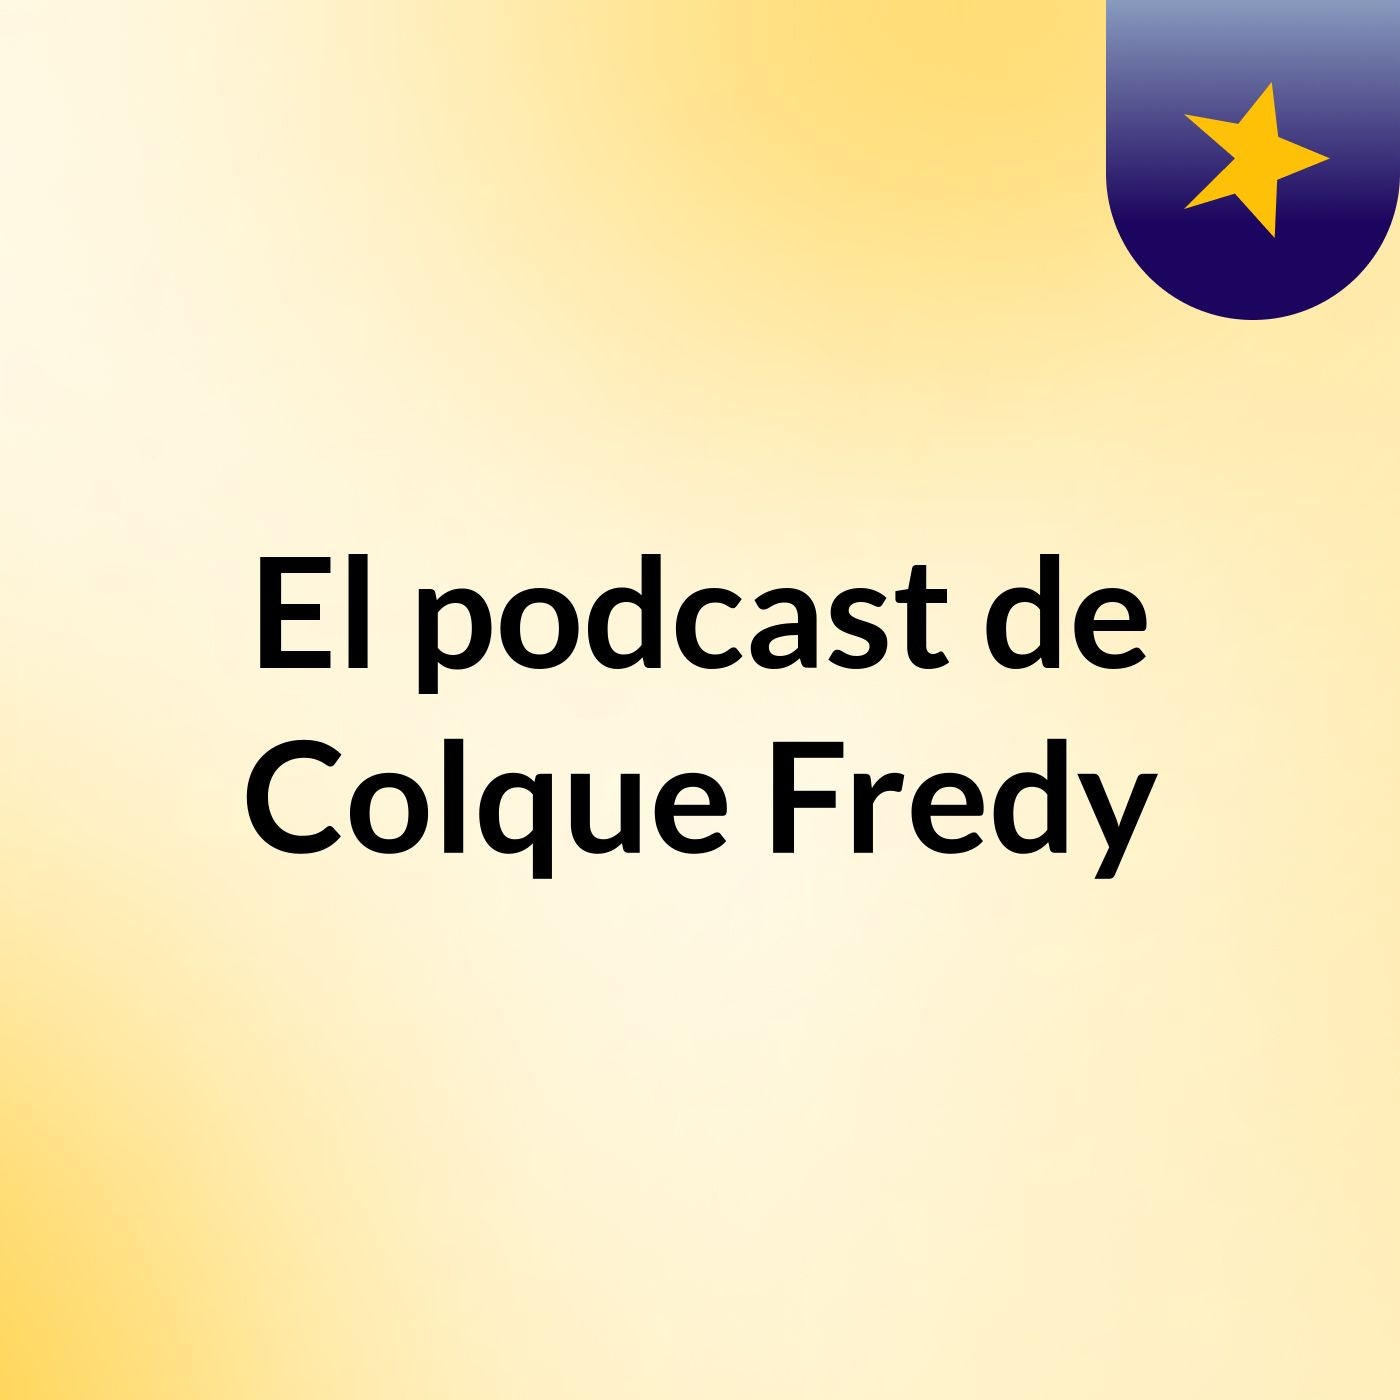 El podcast de Colque Fredy